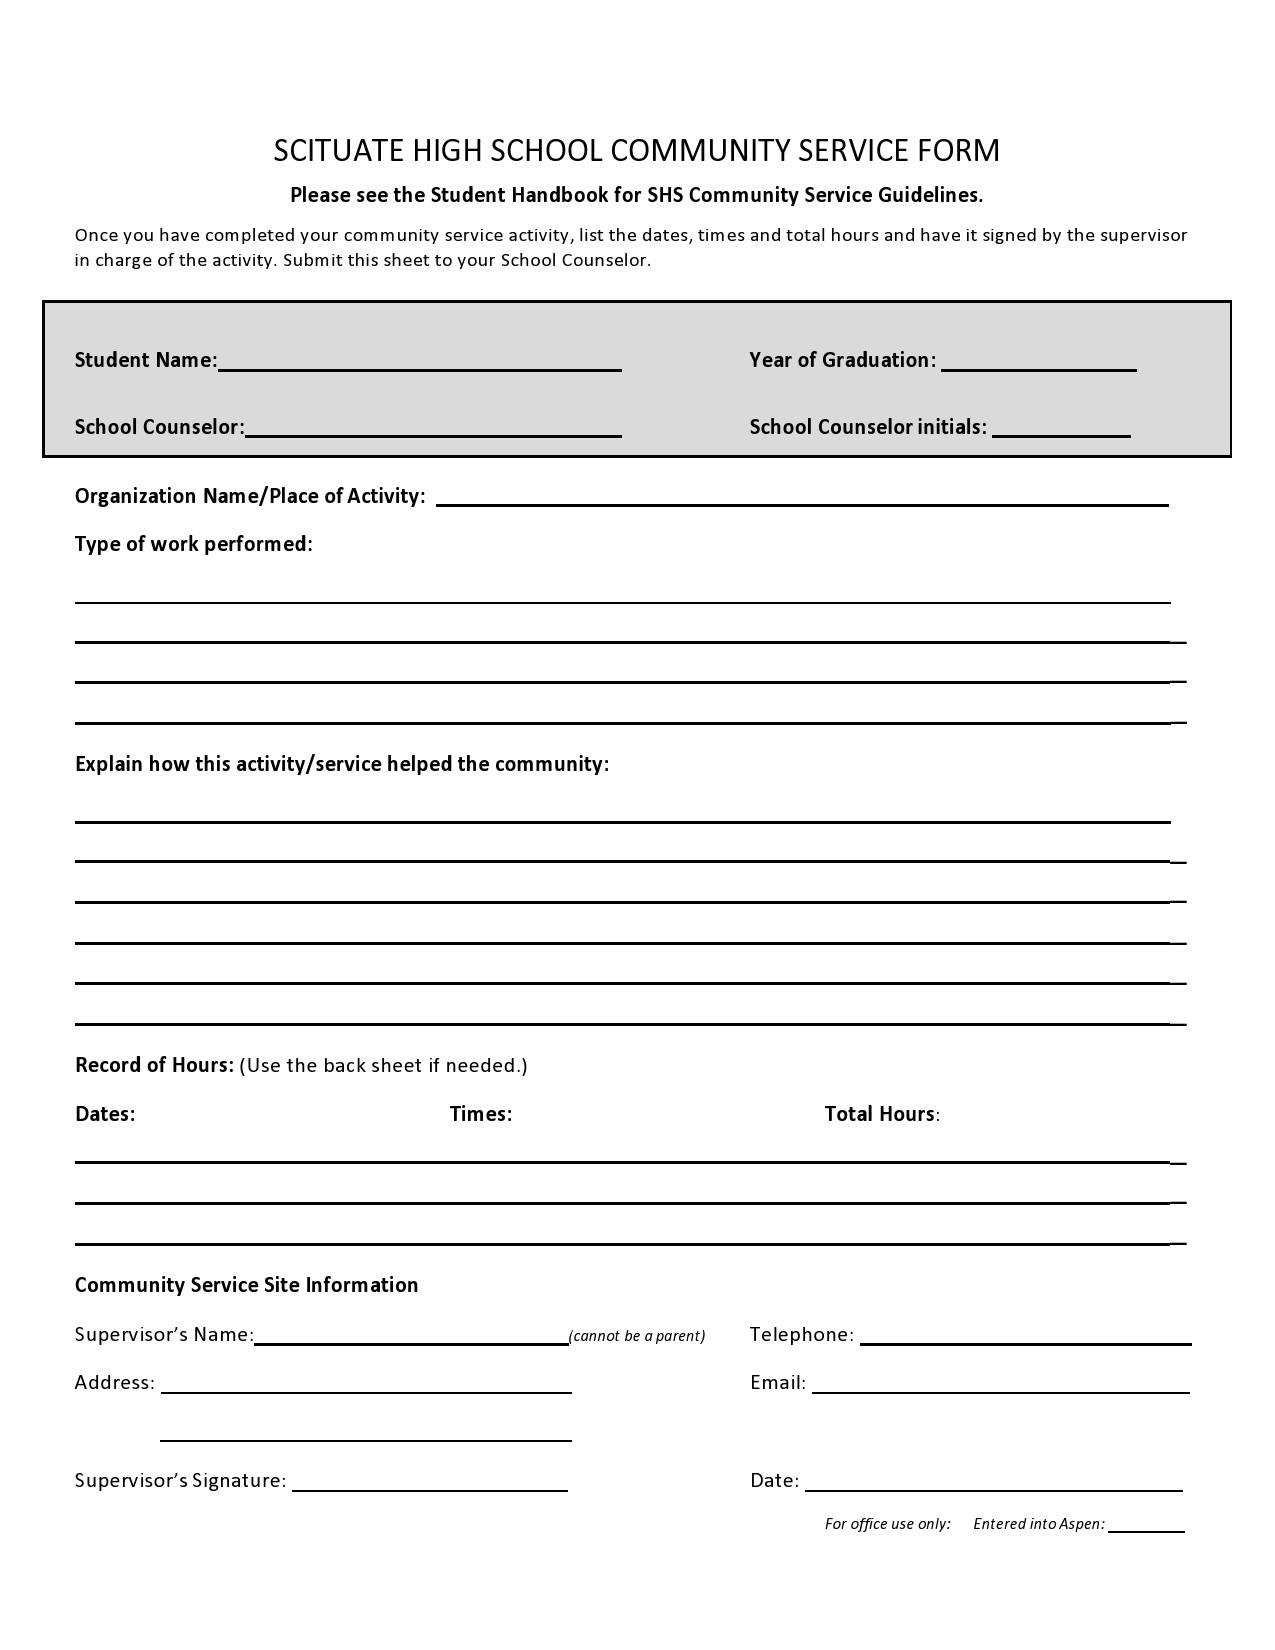 Free community service form 20